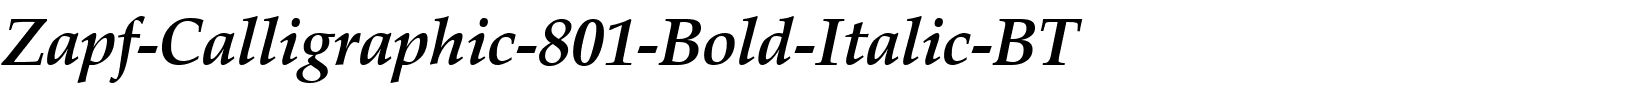 Zapf-Calligraphic-801-Bold-Italic-BT.ttf